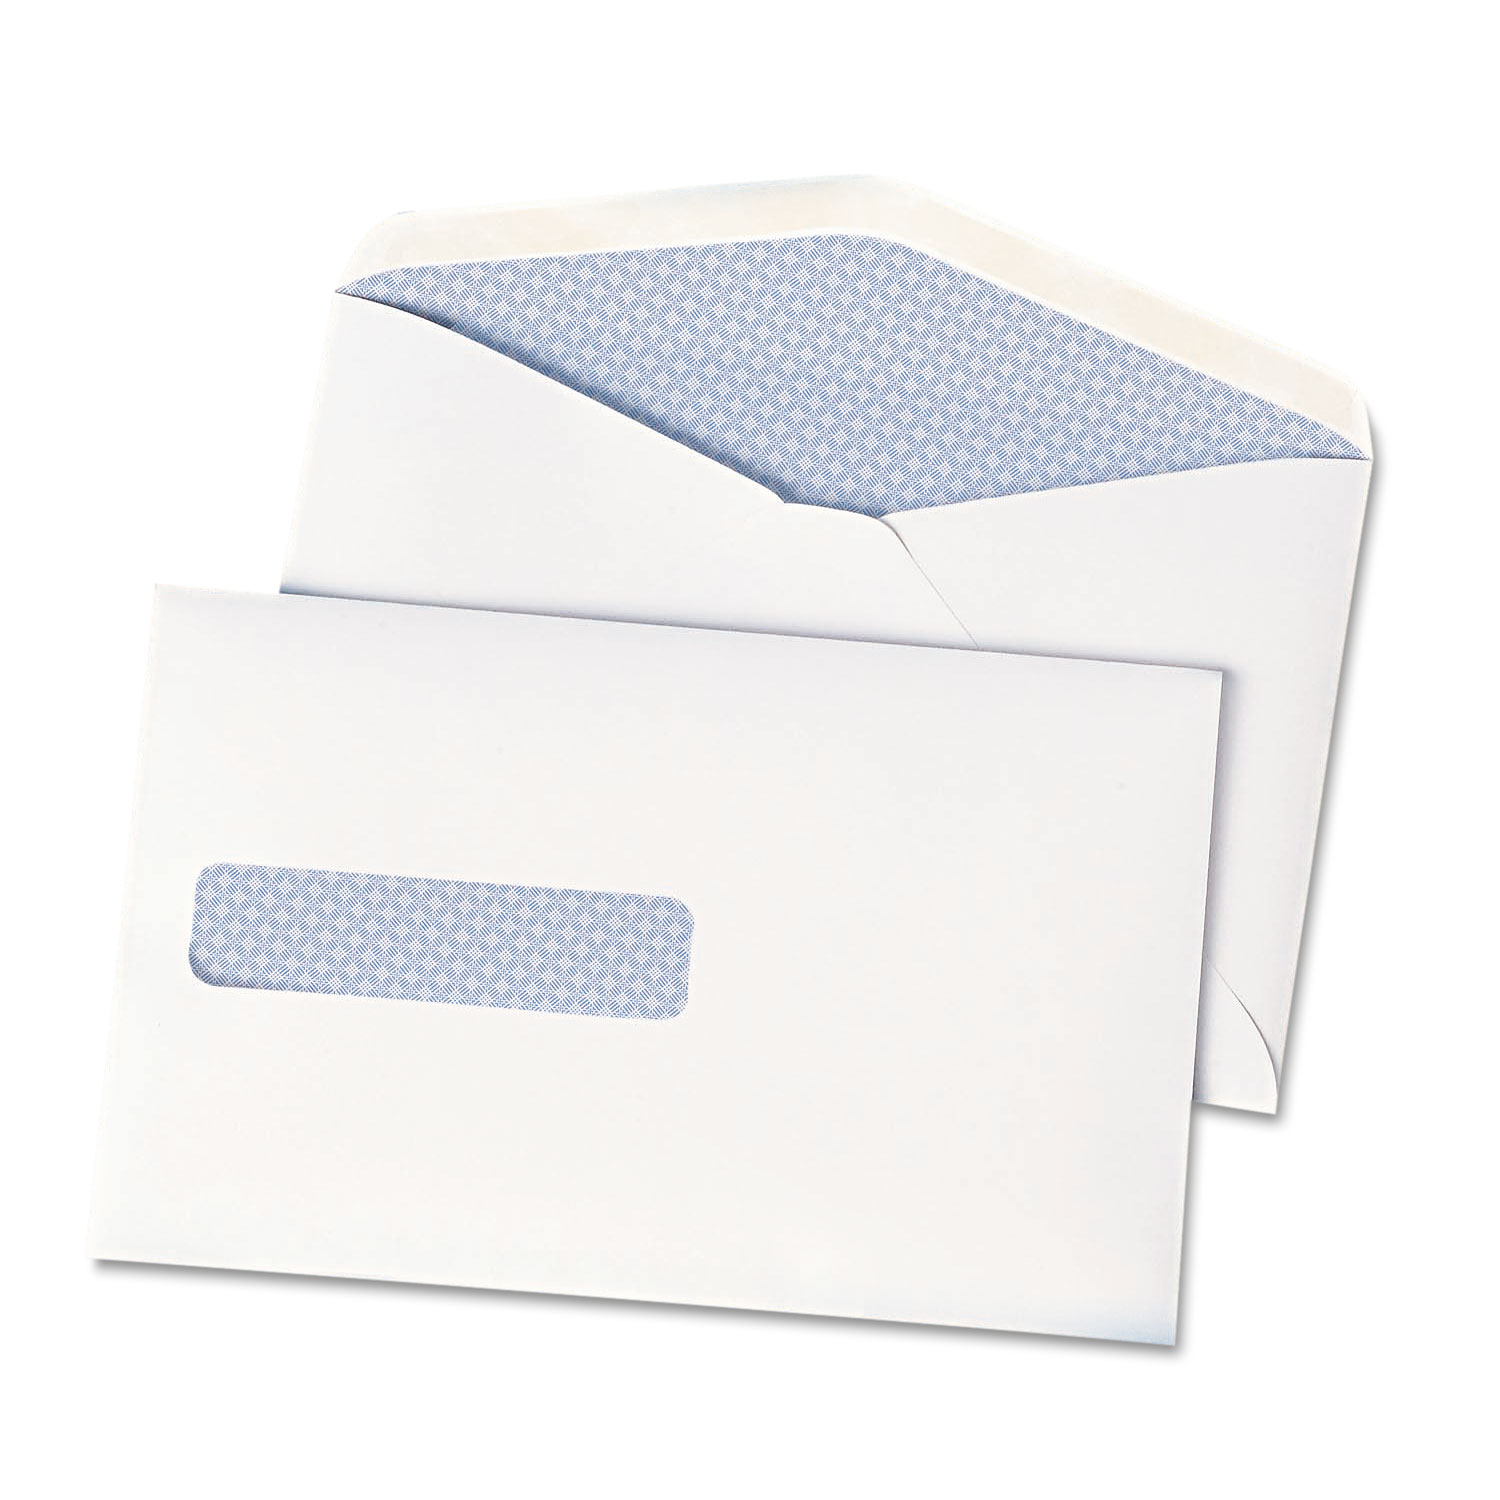 Postage Saving Envelope, #6 5/8, Commercial Flap, Gummed Closure, 6 x 9.5, White, 500/Pack